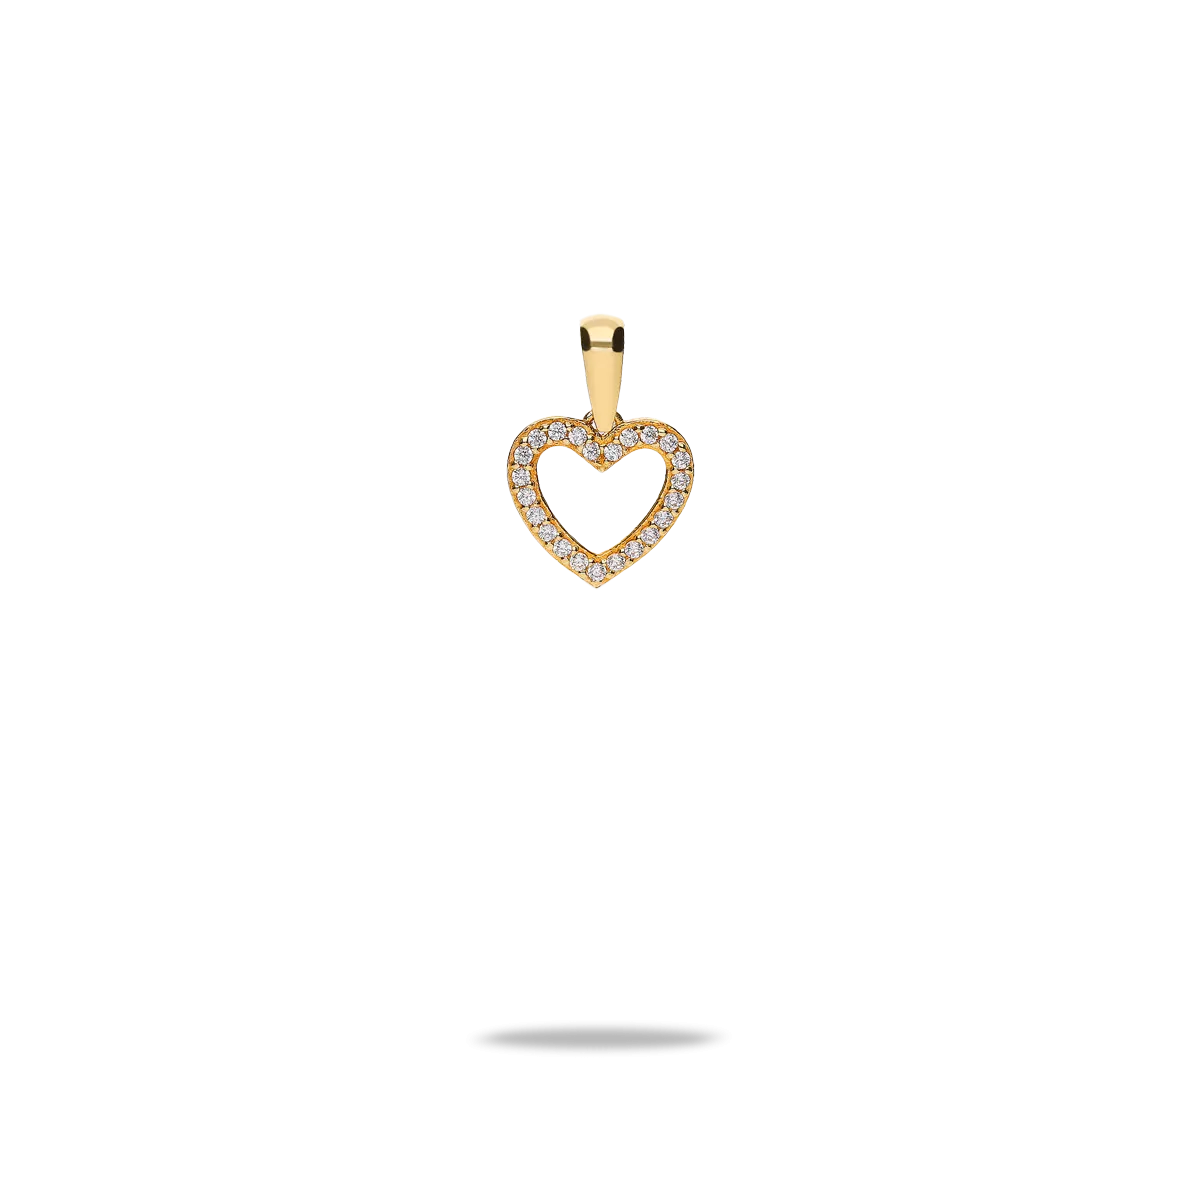 Colgante corazon circonitas oro 18 quilates